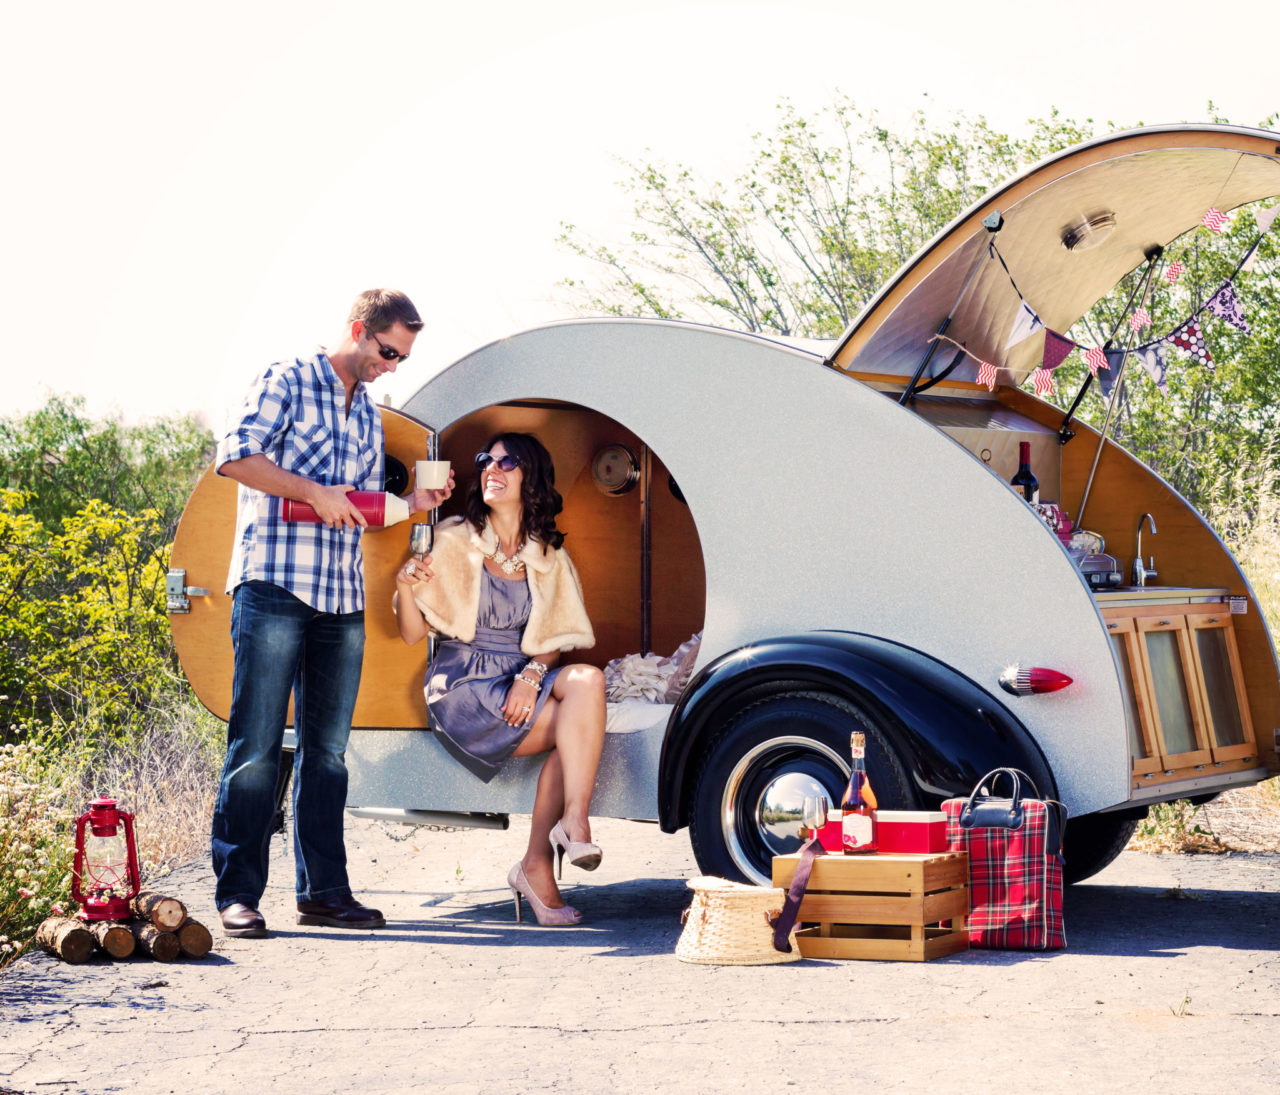 Man and woman glamorously camping